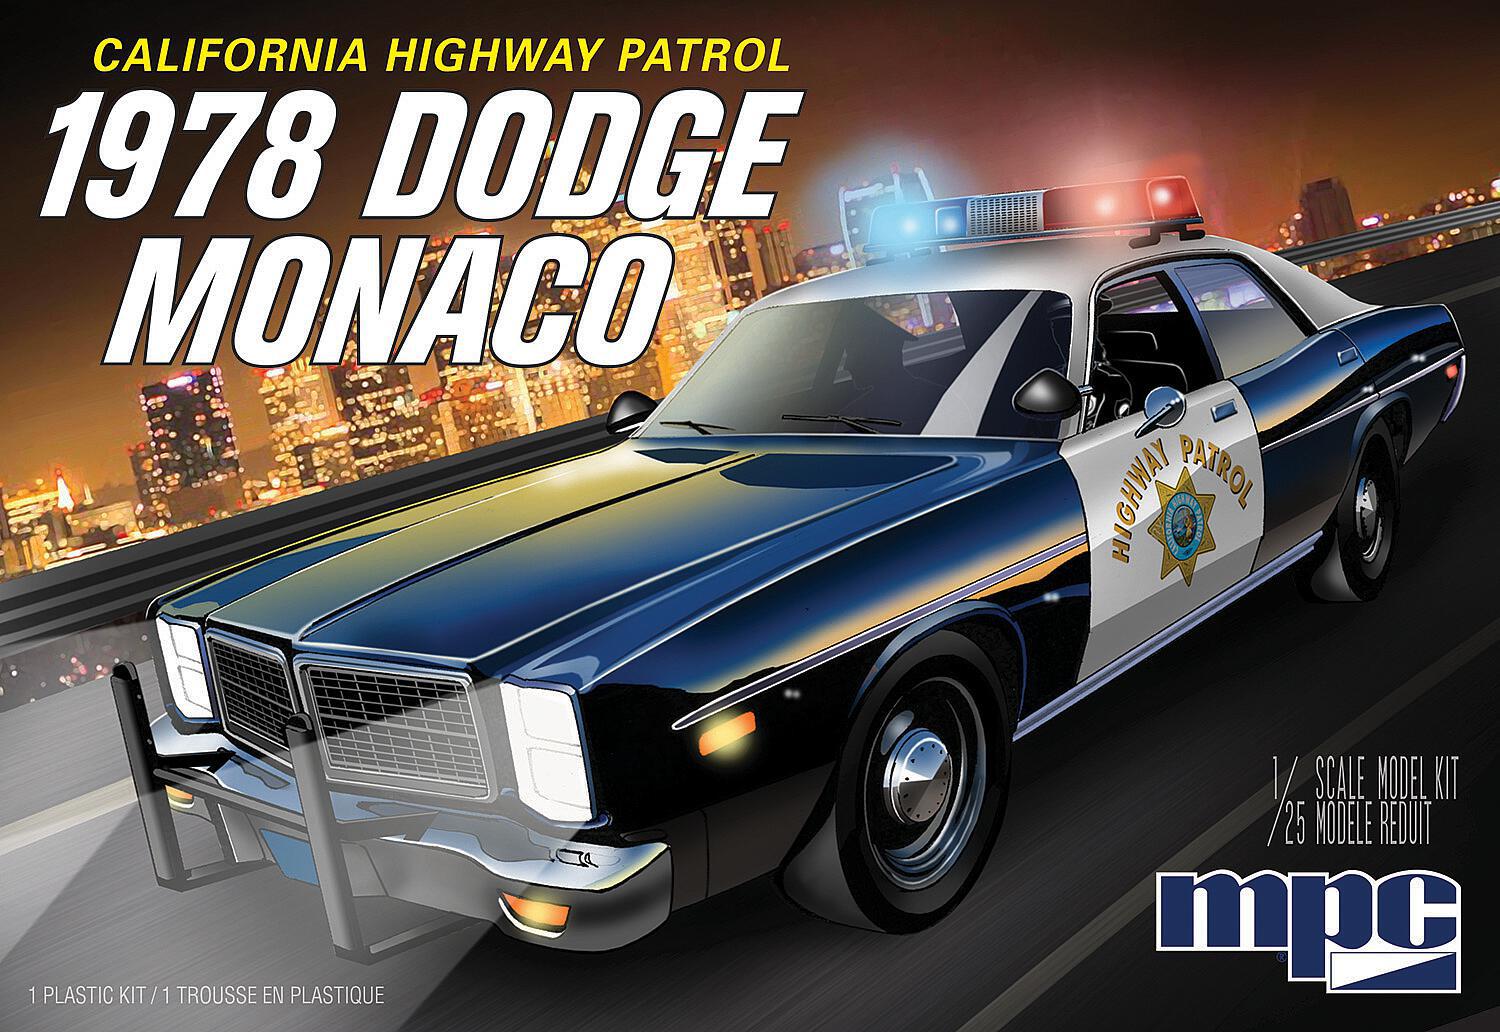 dodge monaco cop car 4/4 4978er Dodge Monaco, Police Car CHP